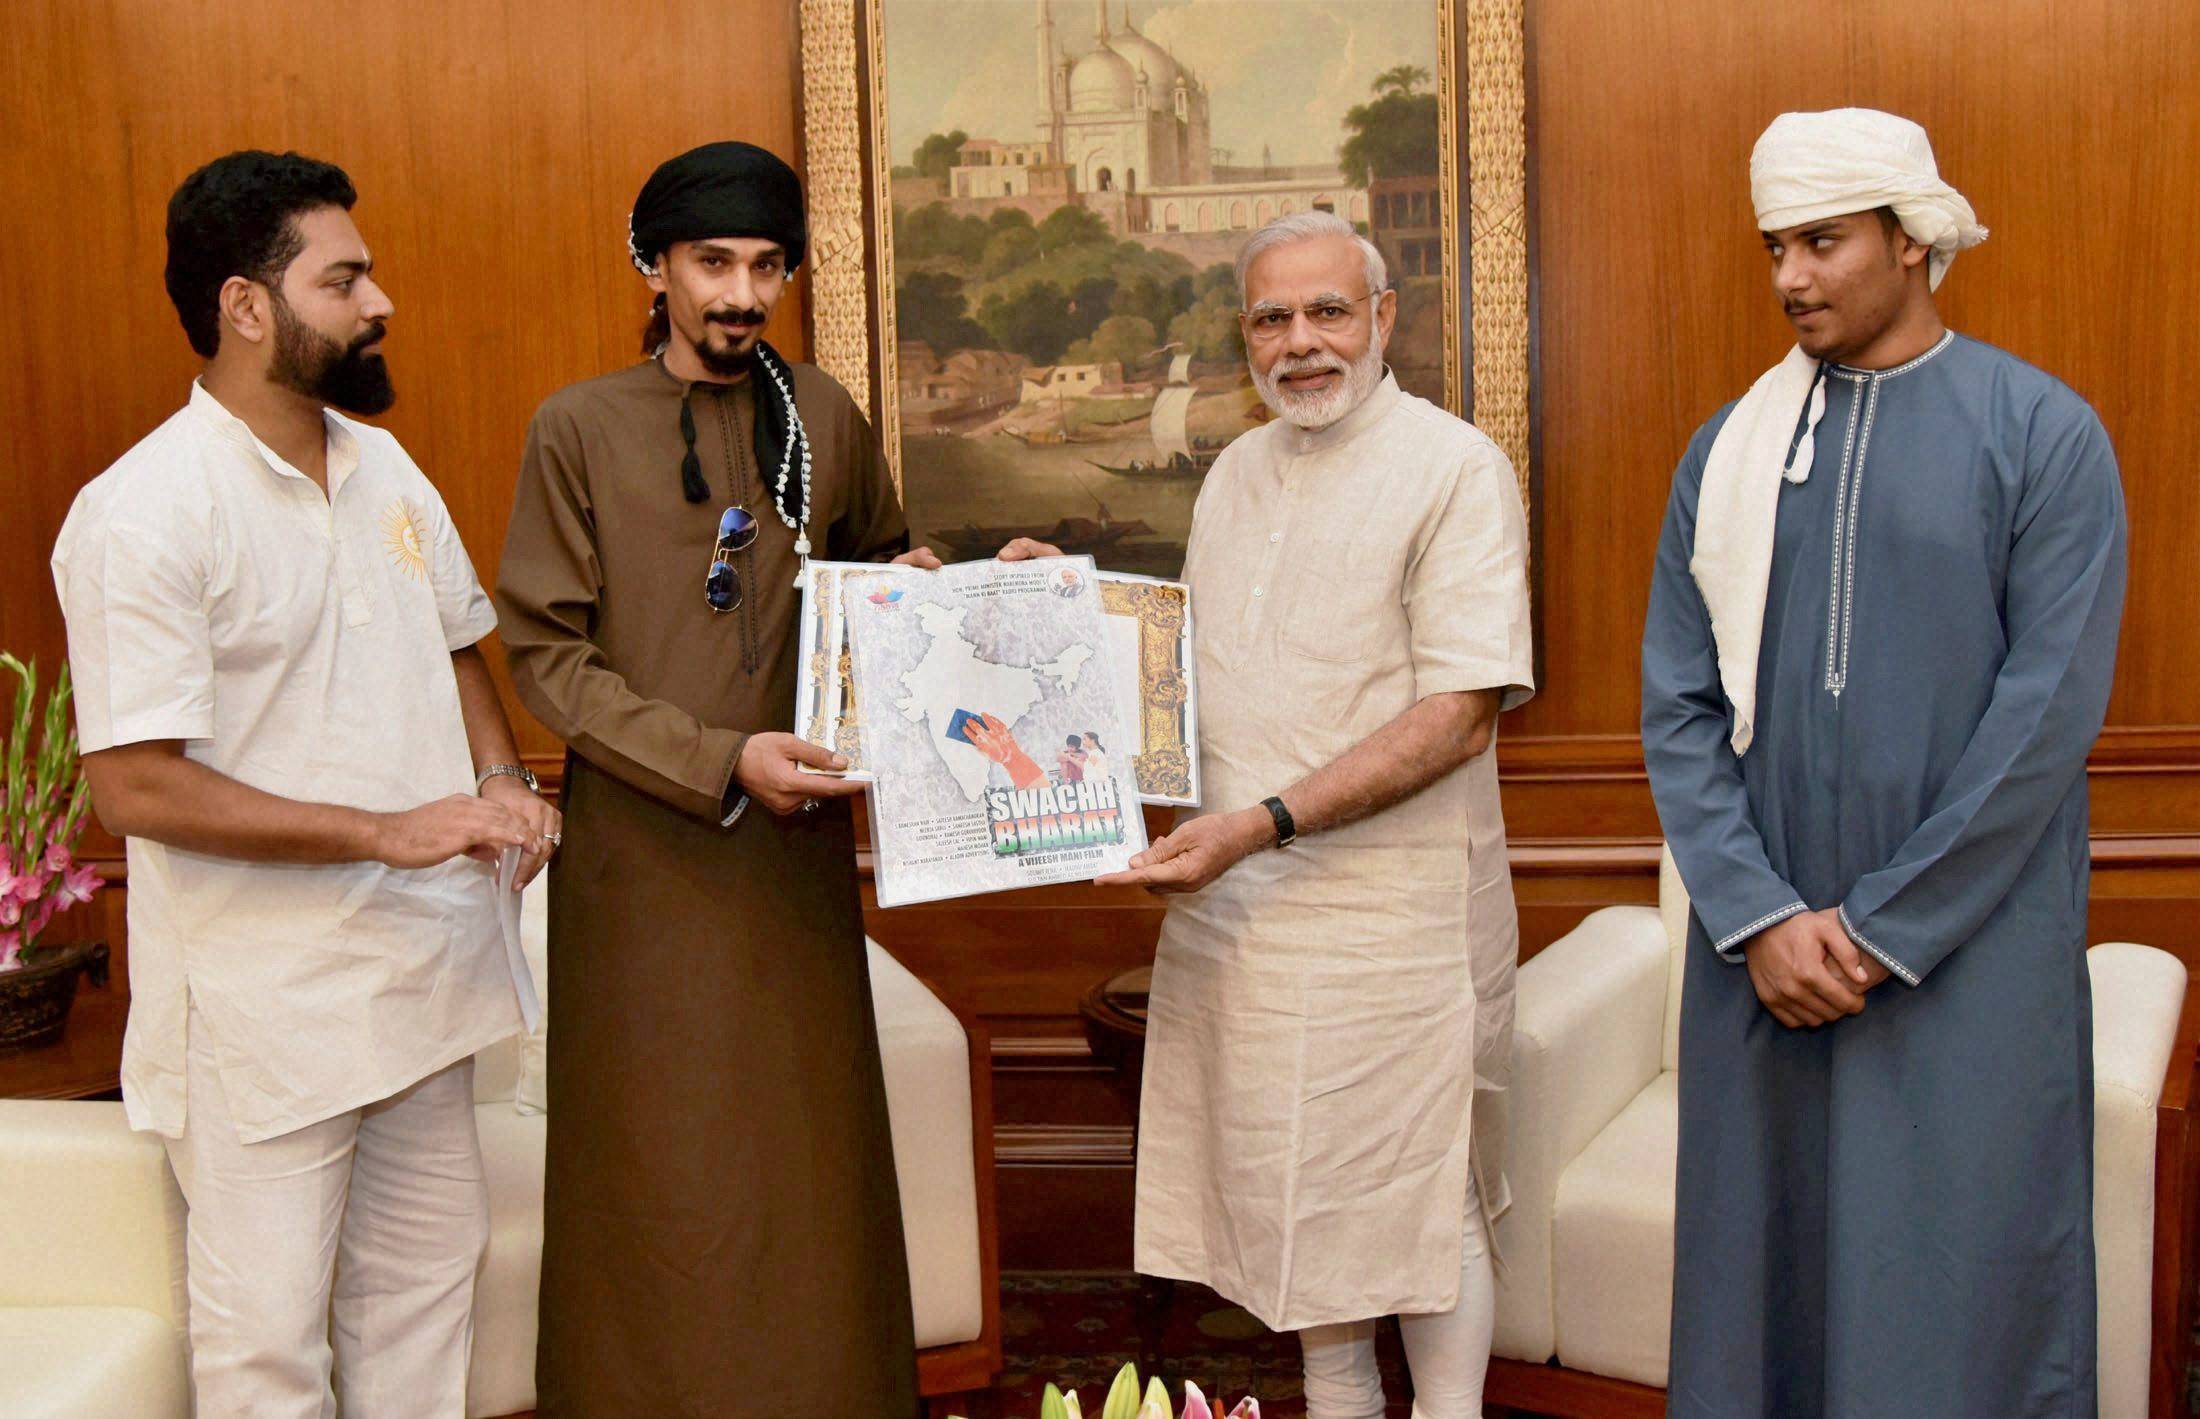 Meeting Indian Prime Minister Modi was a dream come true, says Omani writer